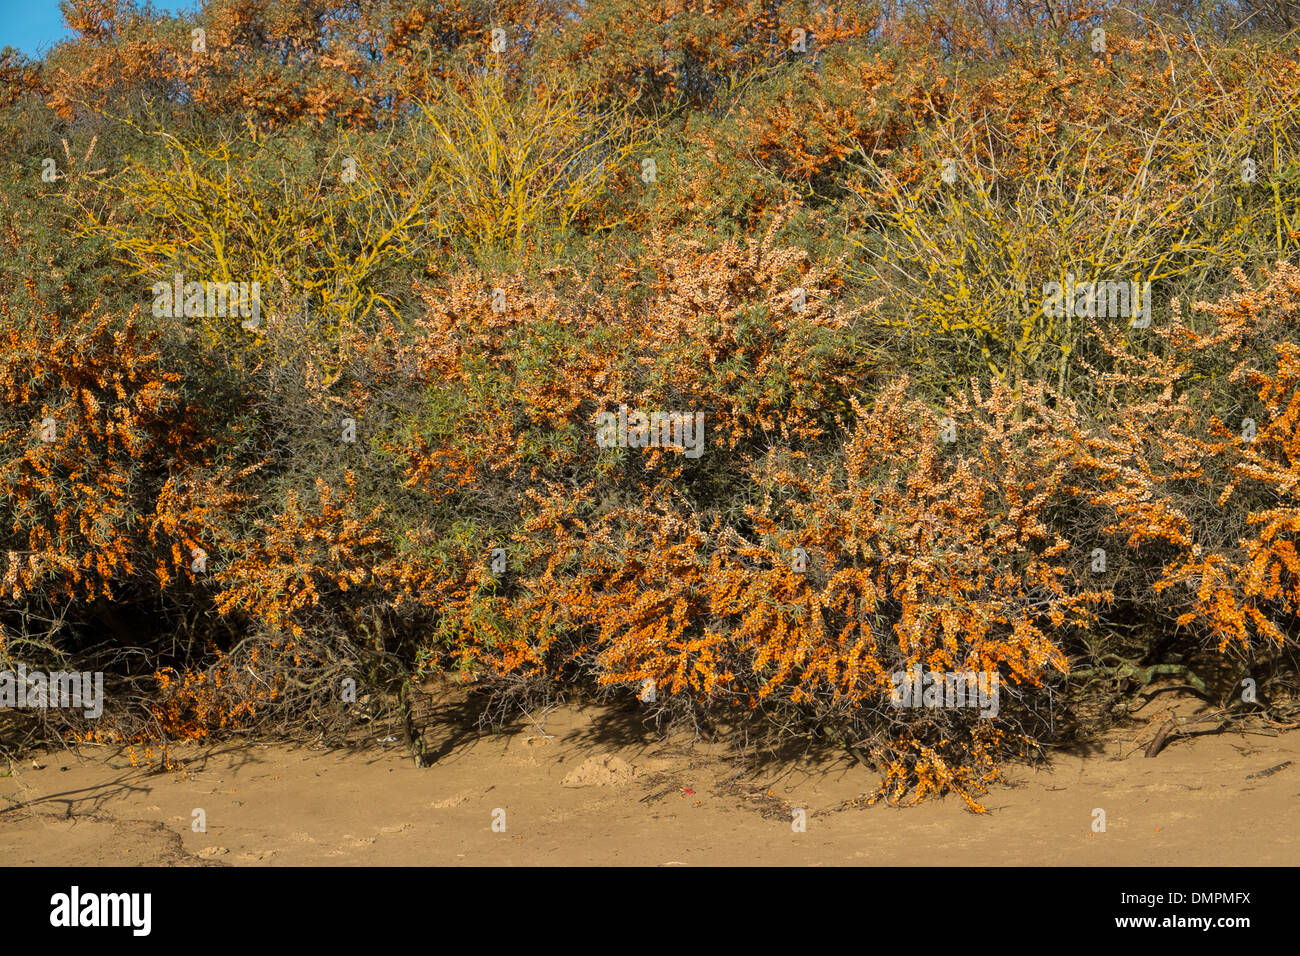 Coastal dune covered in Sea Buckthorn scrub, (Hippophae) showing ripe berries. Stock Photo